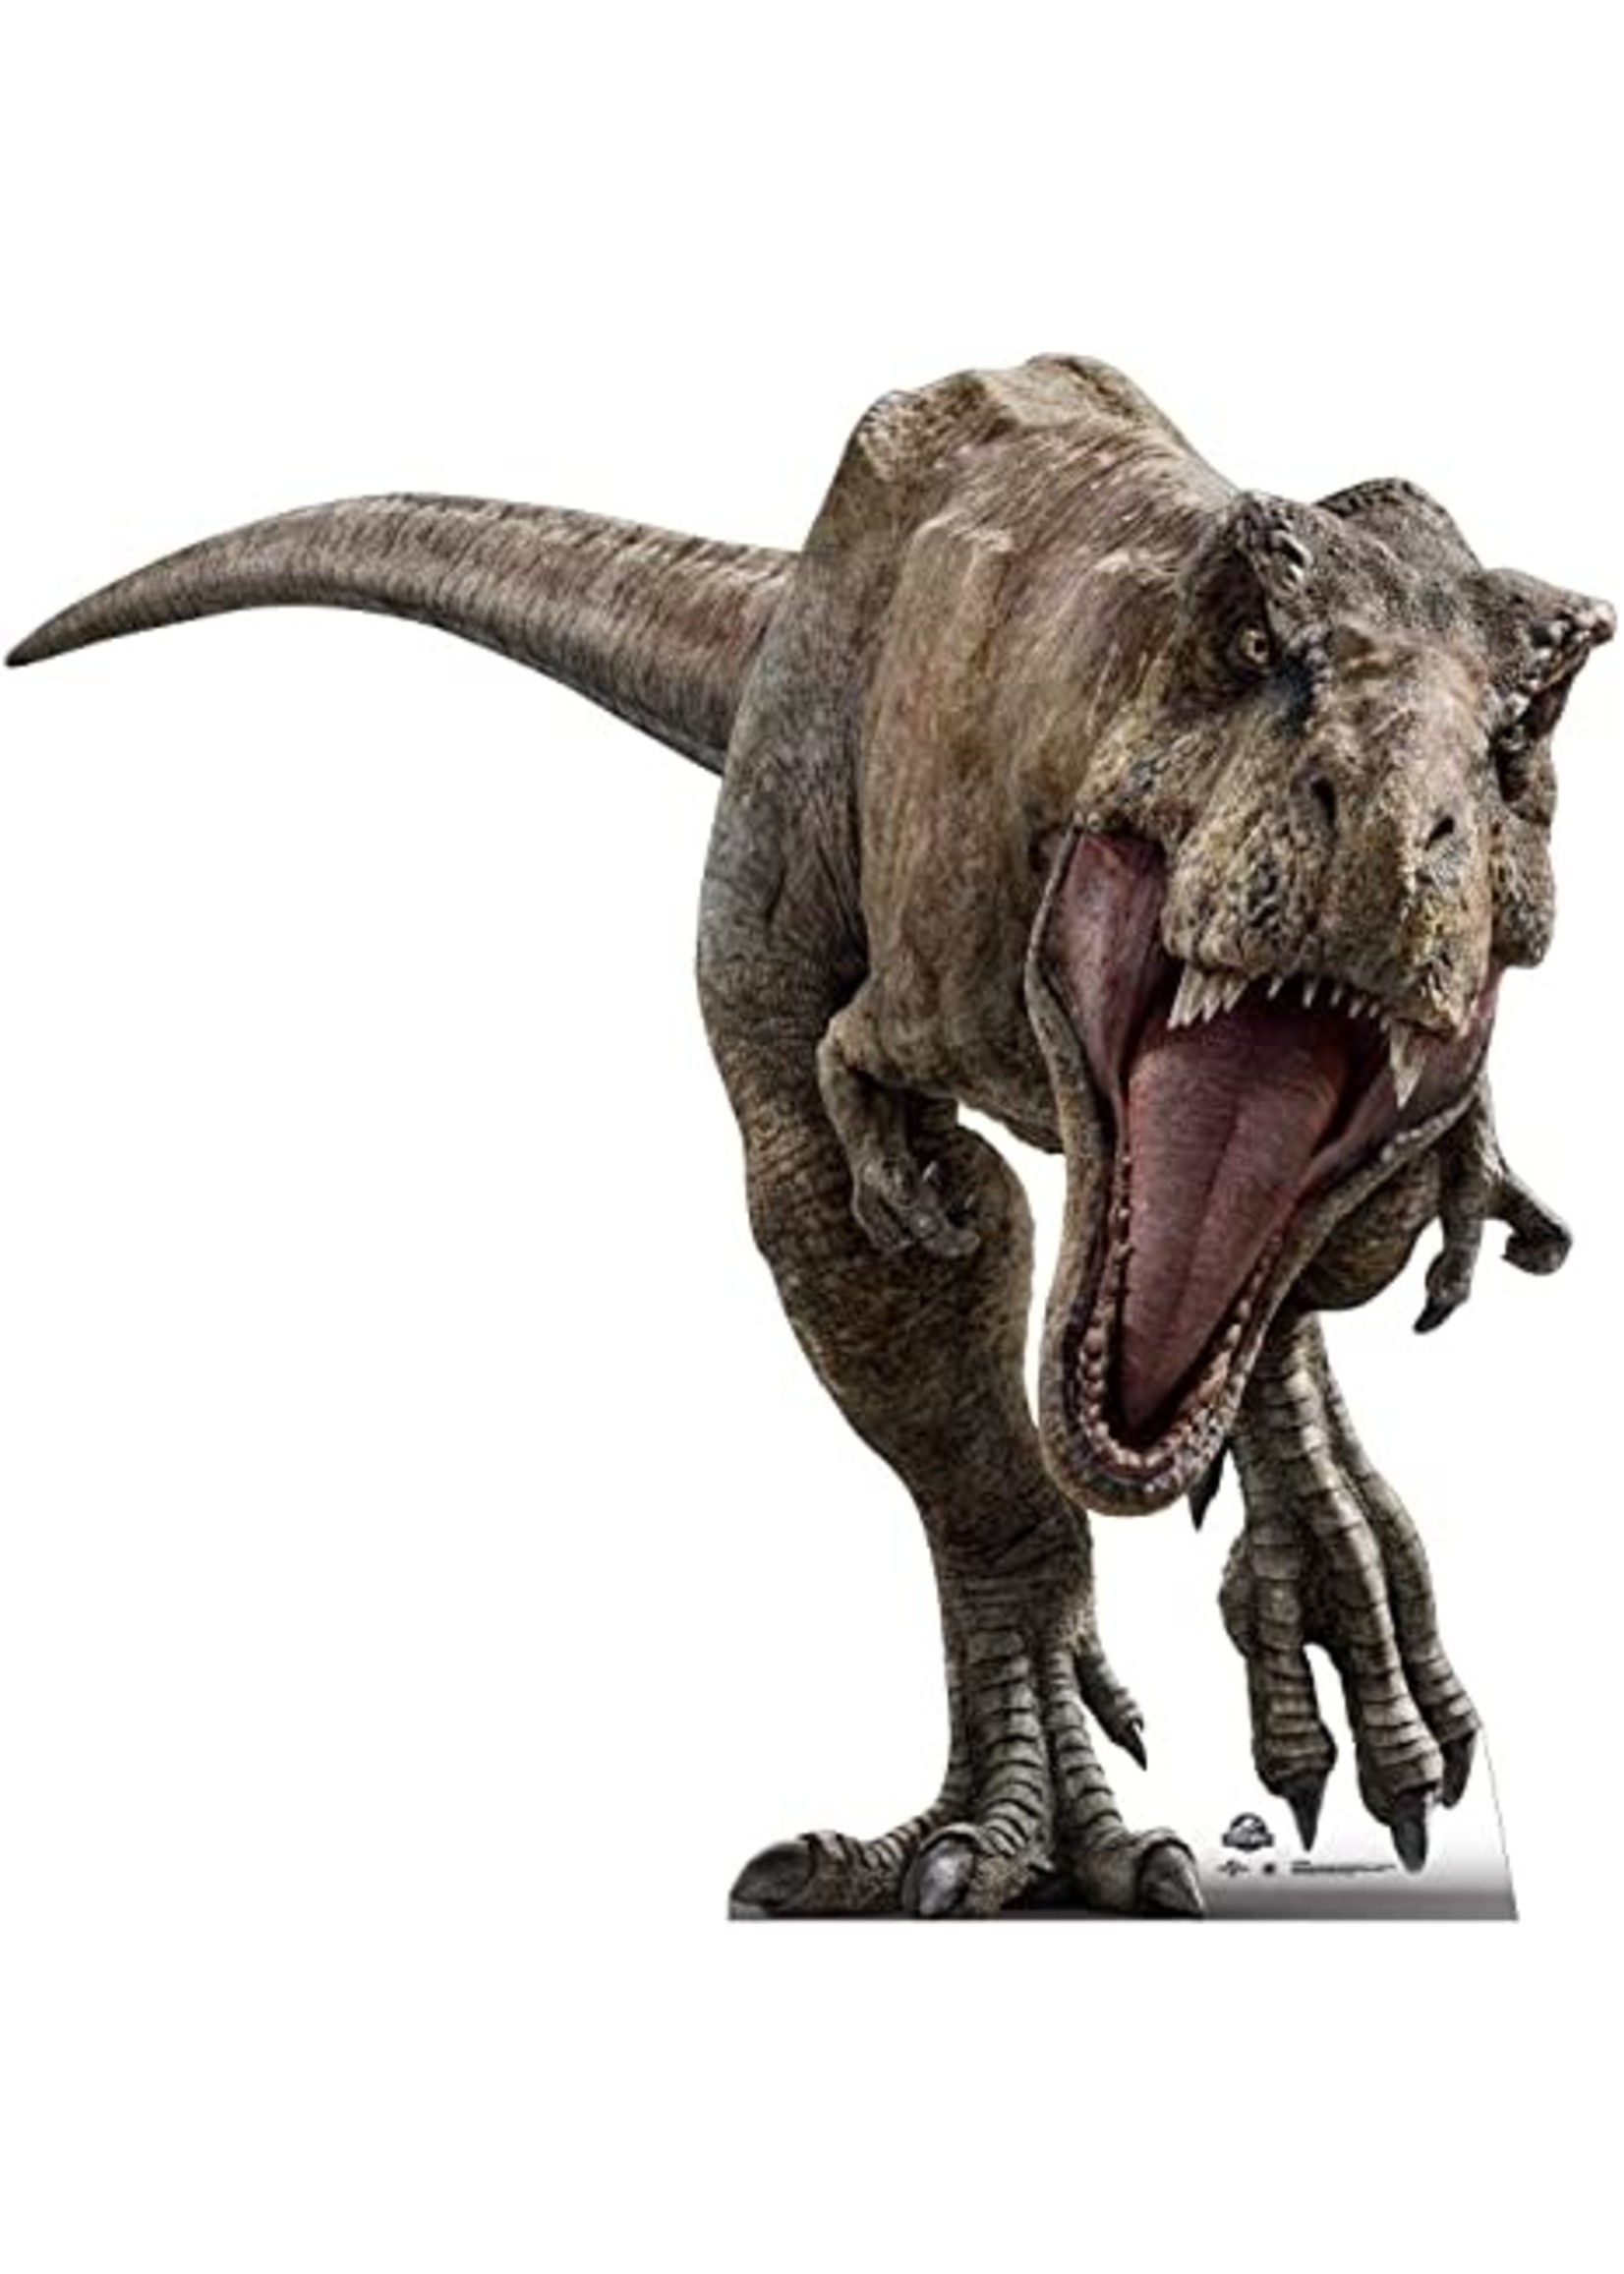 Lifesize Standup Jurassic Park T. Rex